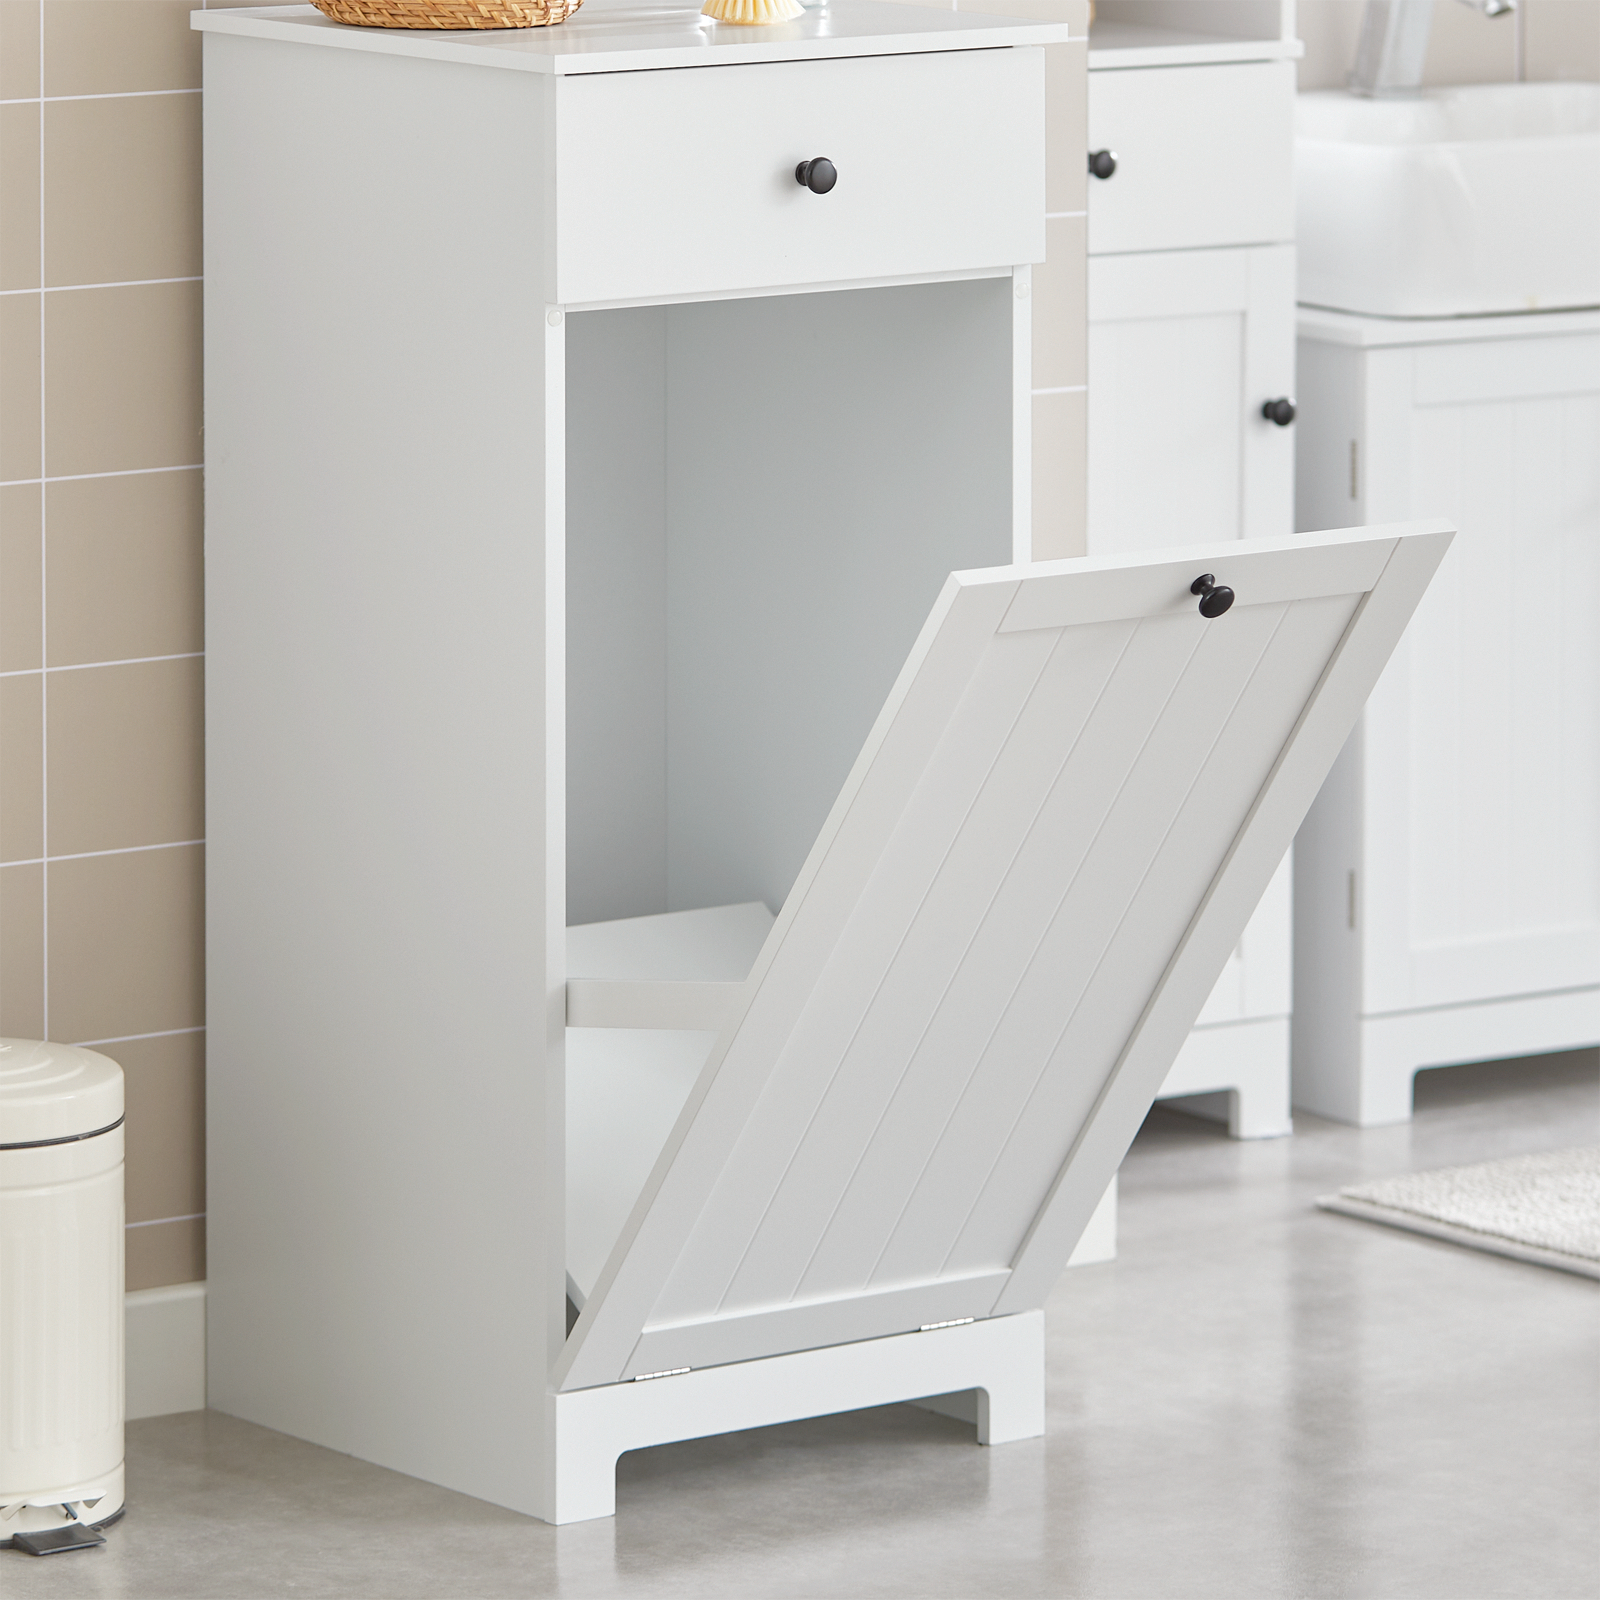 SoBuy White Bathroom Laundry Basket Bathroom Storage Cabinet Unit with Drawer,BZR21-W